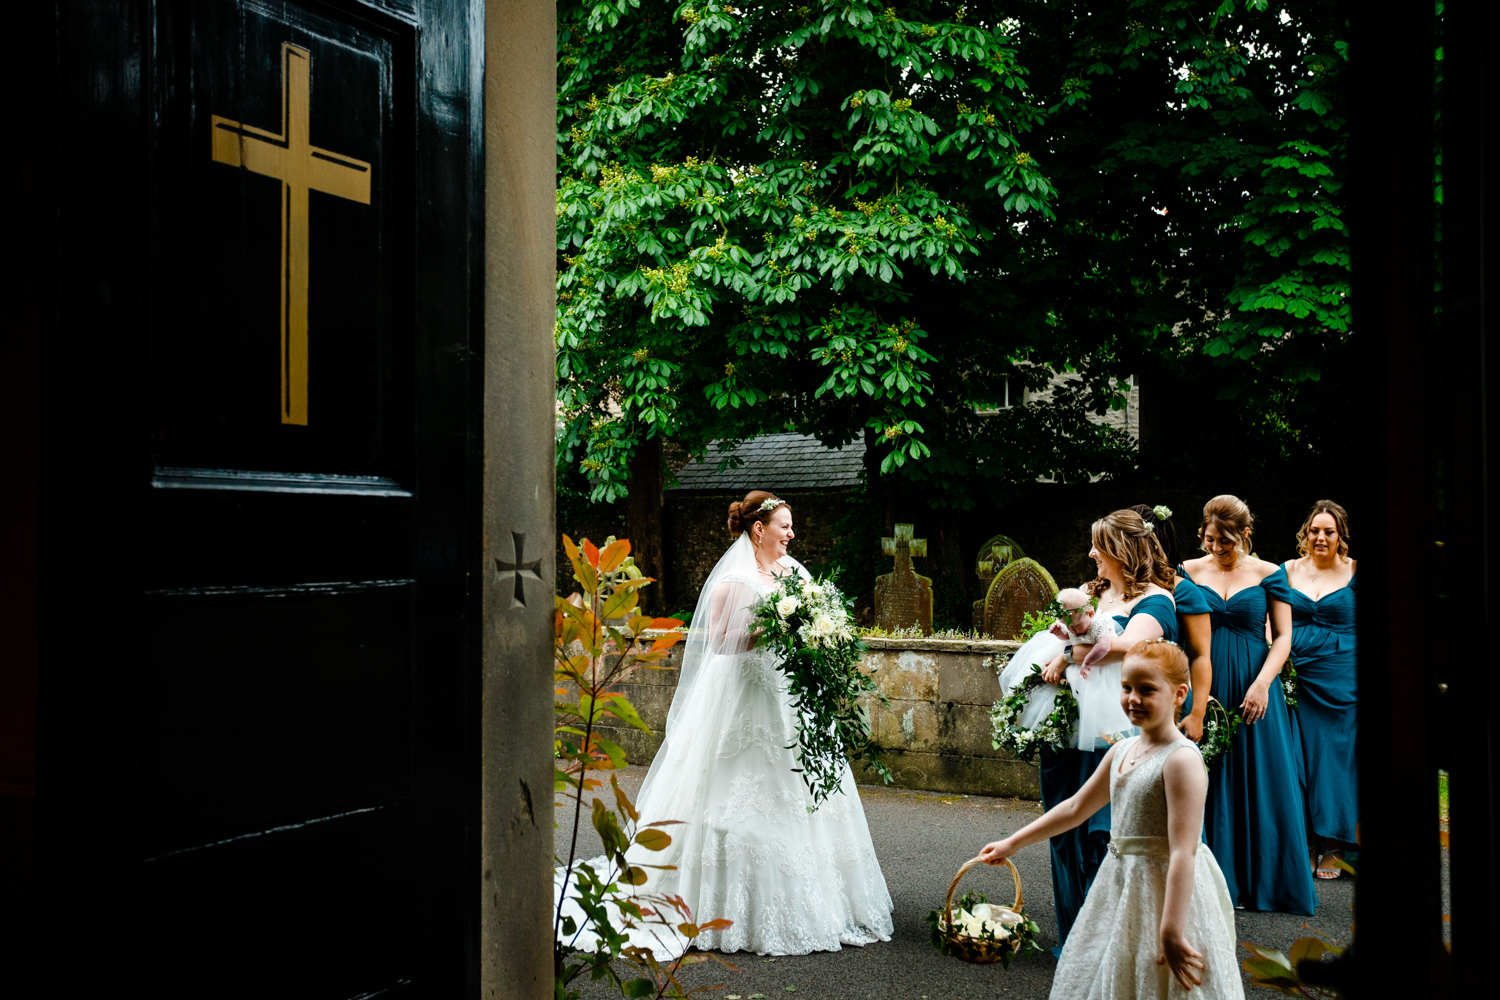 Lancashire-wedding-photographer-adele-and-alex-049.jpg